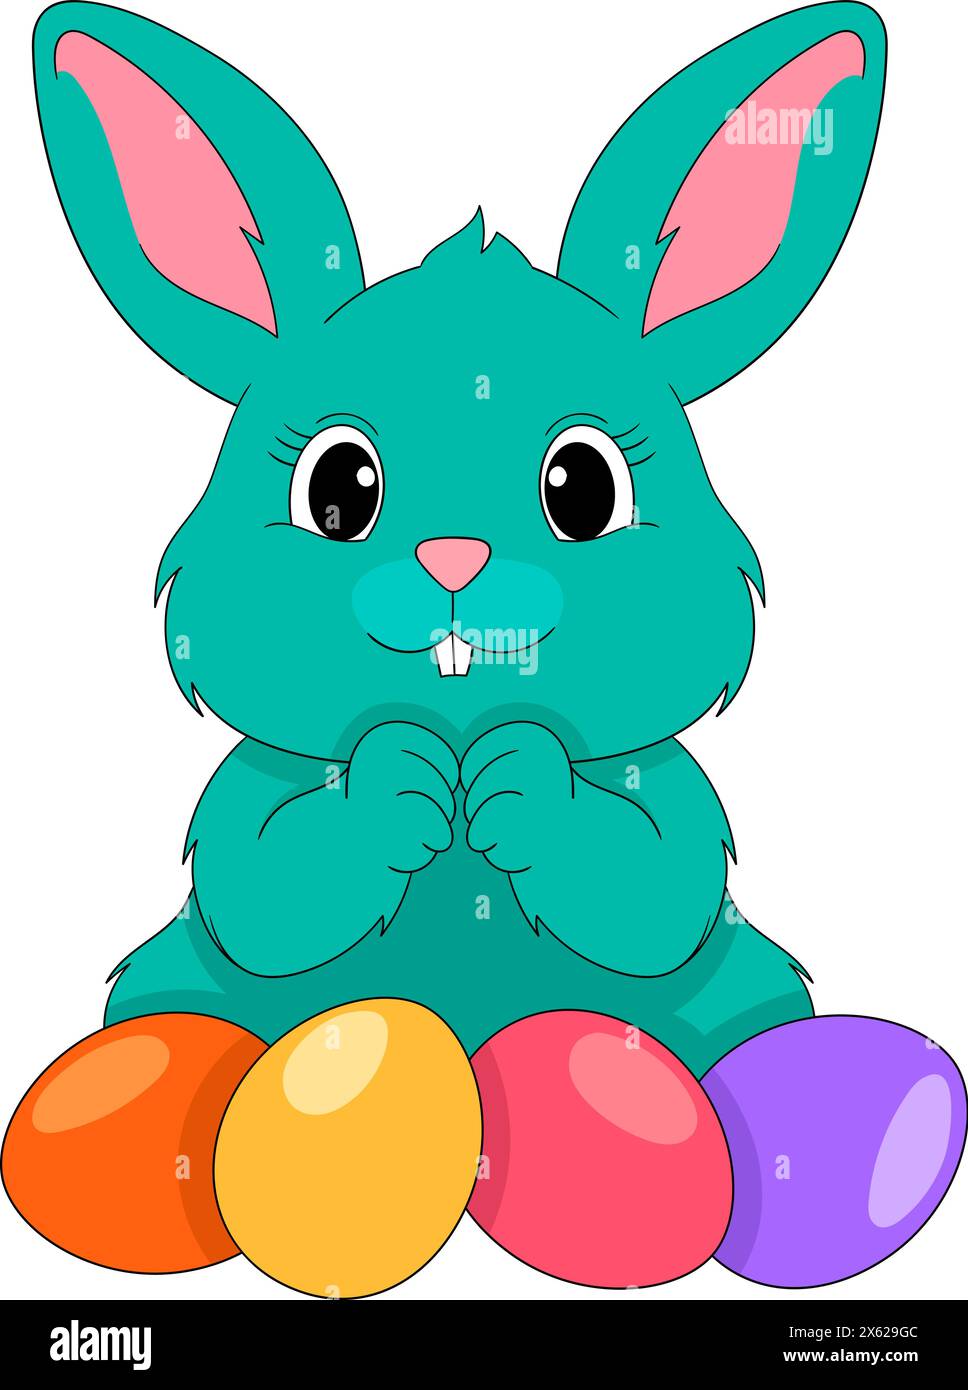 Cartoon doodle illustration of Easter celebration, tosca rabbit with colorful eggs, Catholic Christian celebration, creative drawing Stock Vector